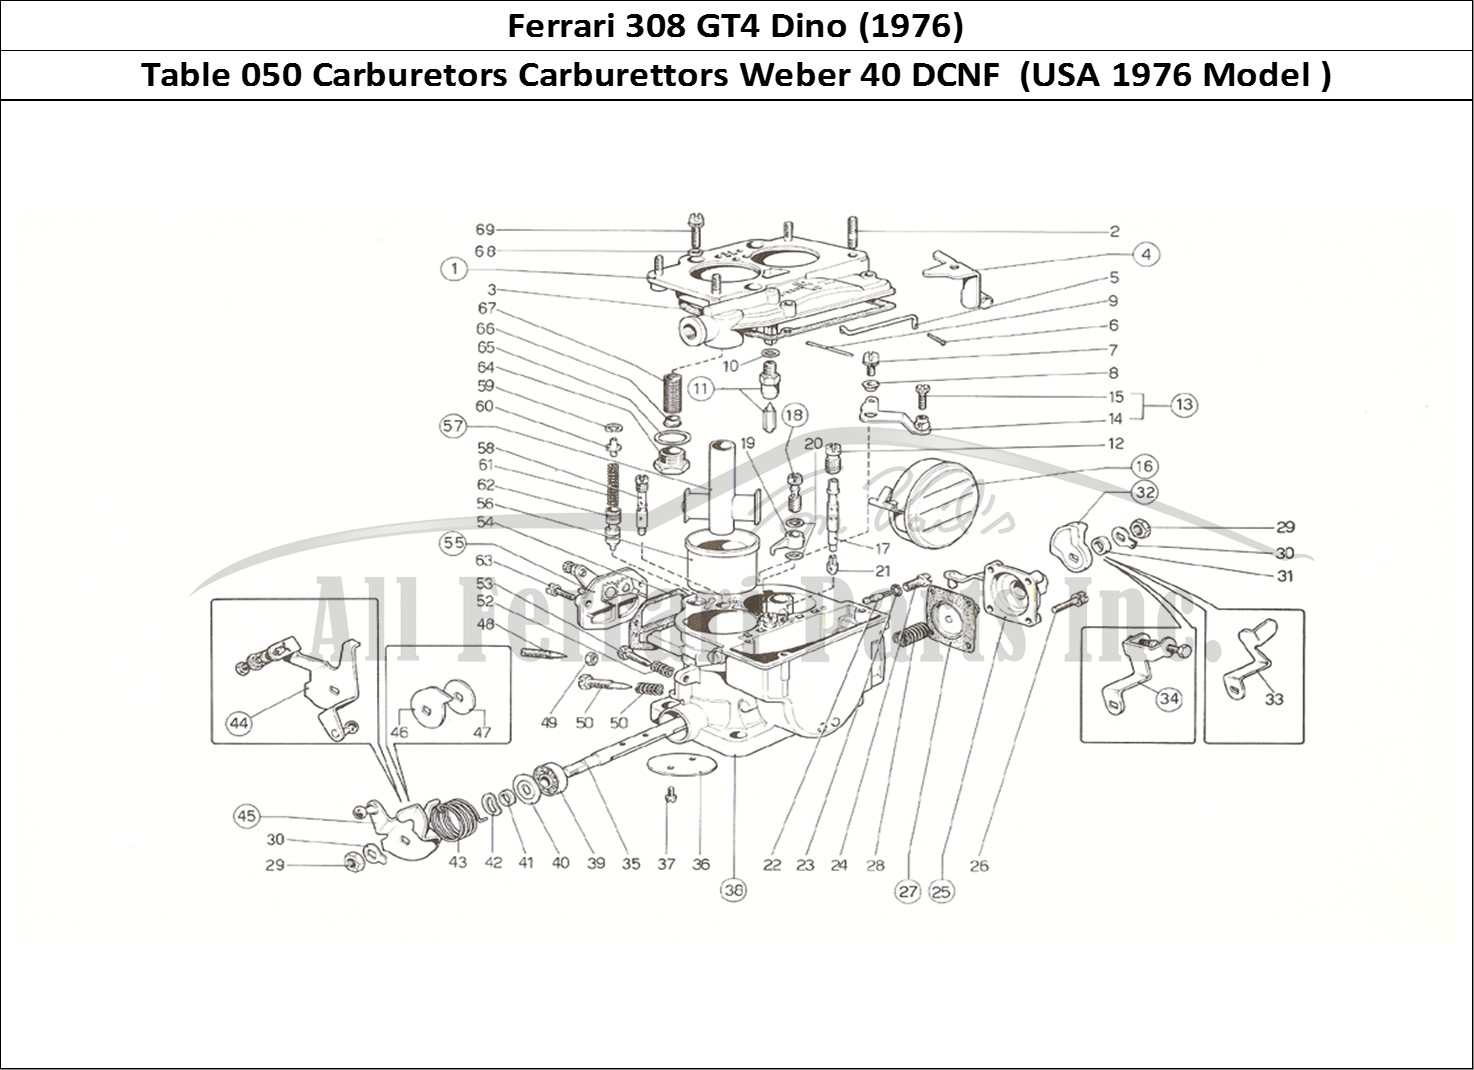 Ferrari Parts Ferrari 308 GT4 Dino (1976) Page 050 Weber 40 DCNF carbs (US 1